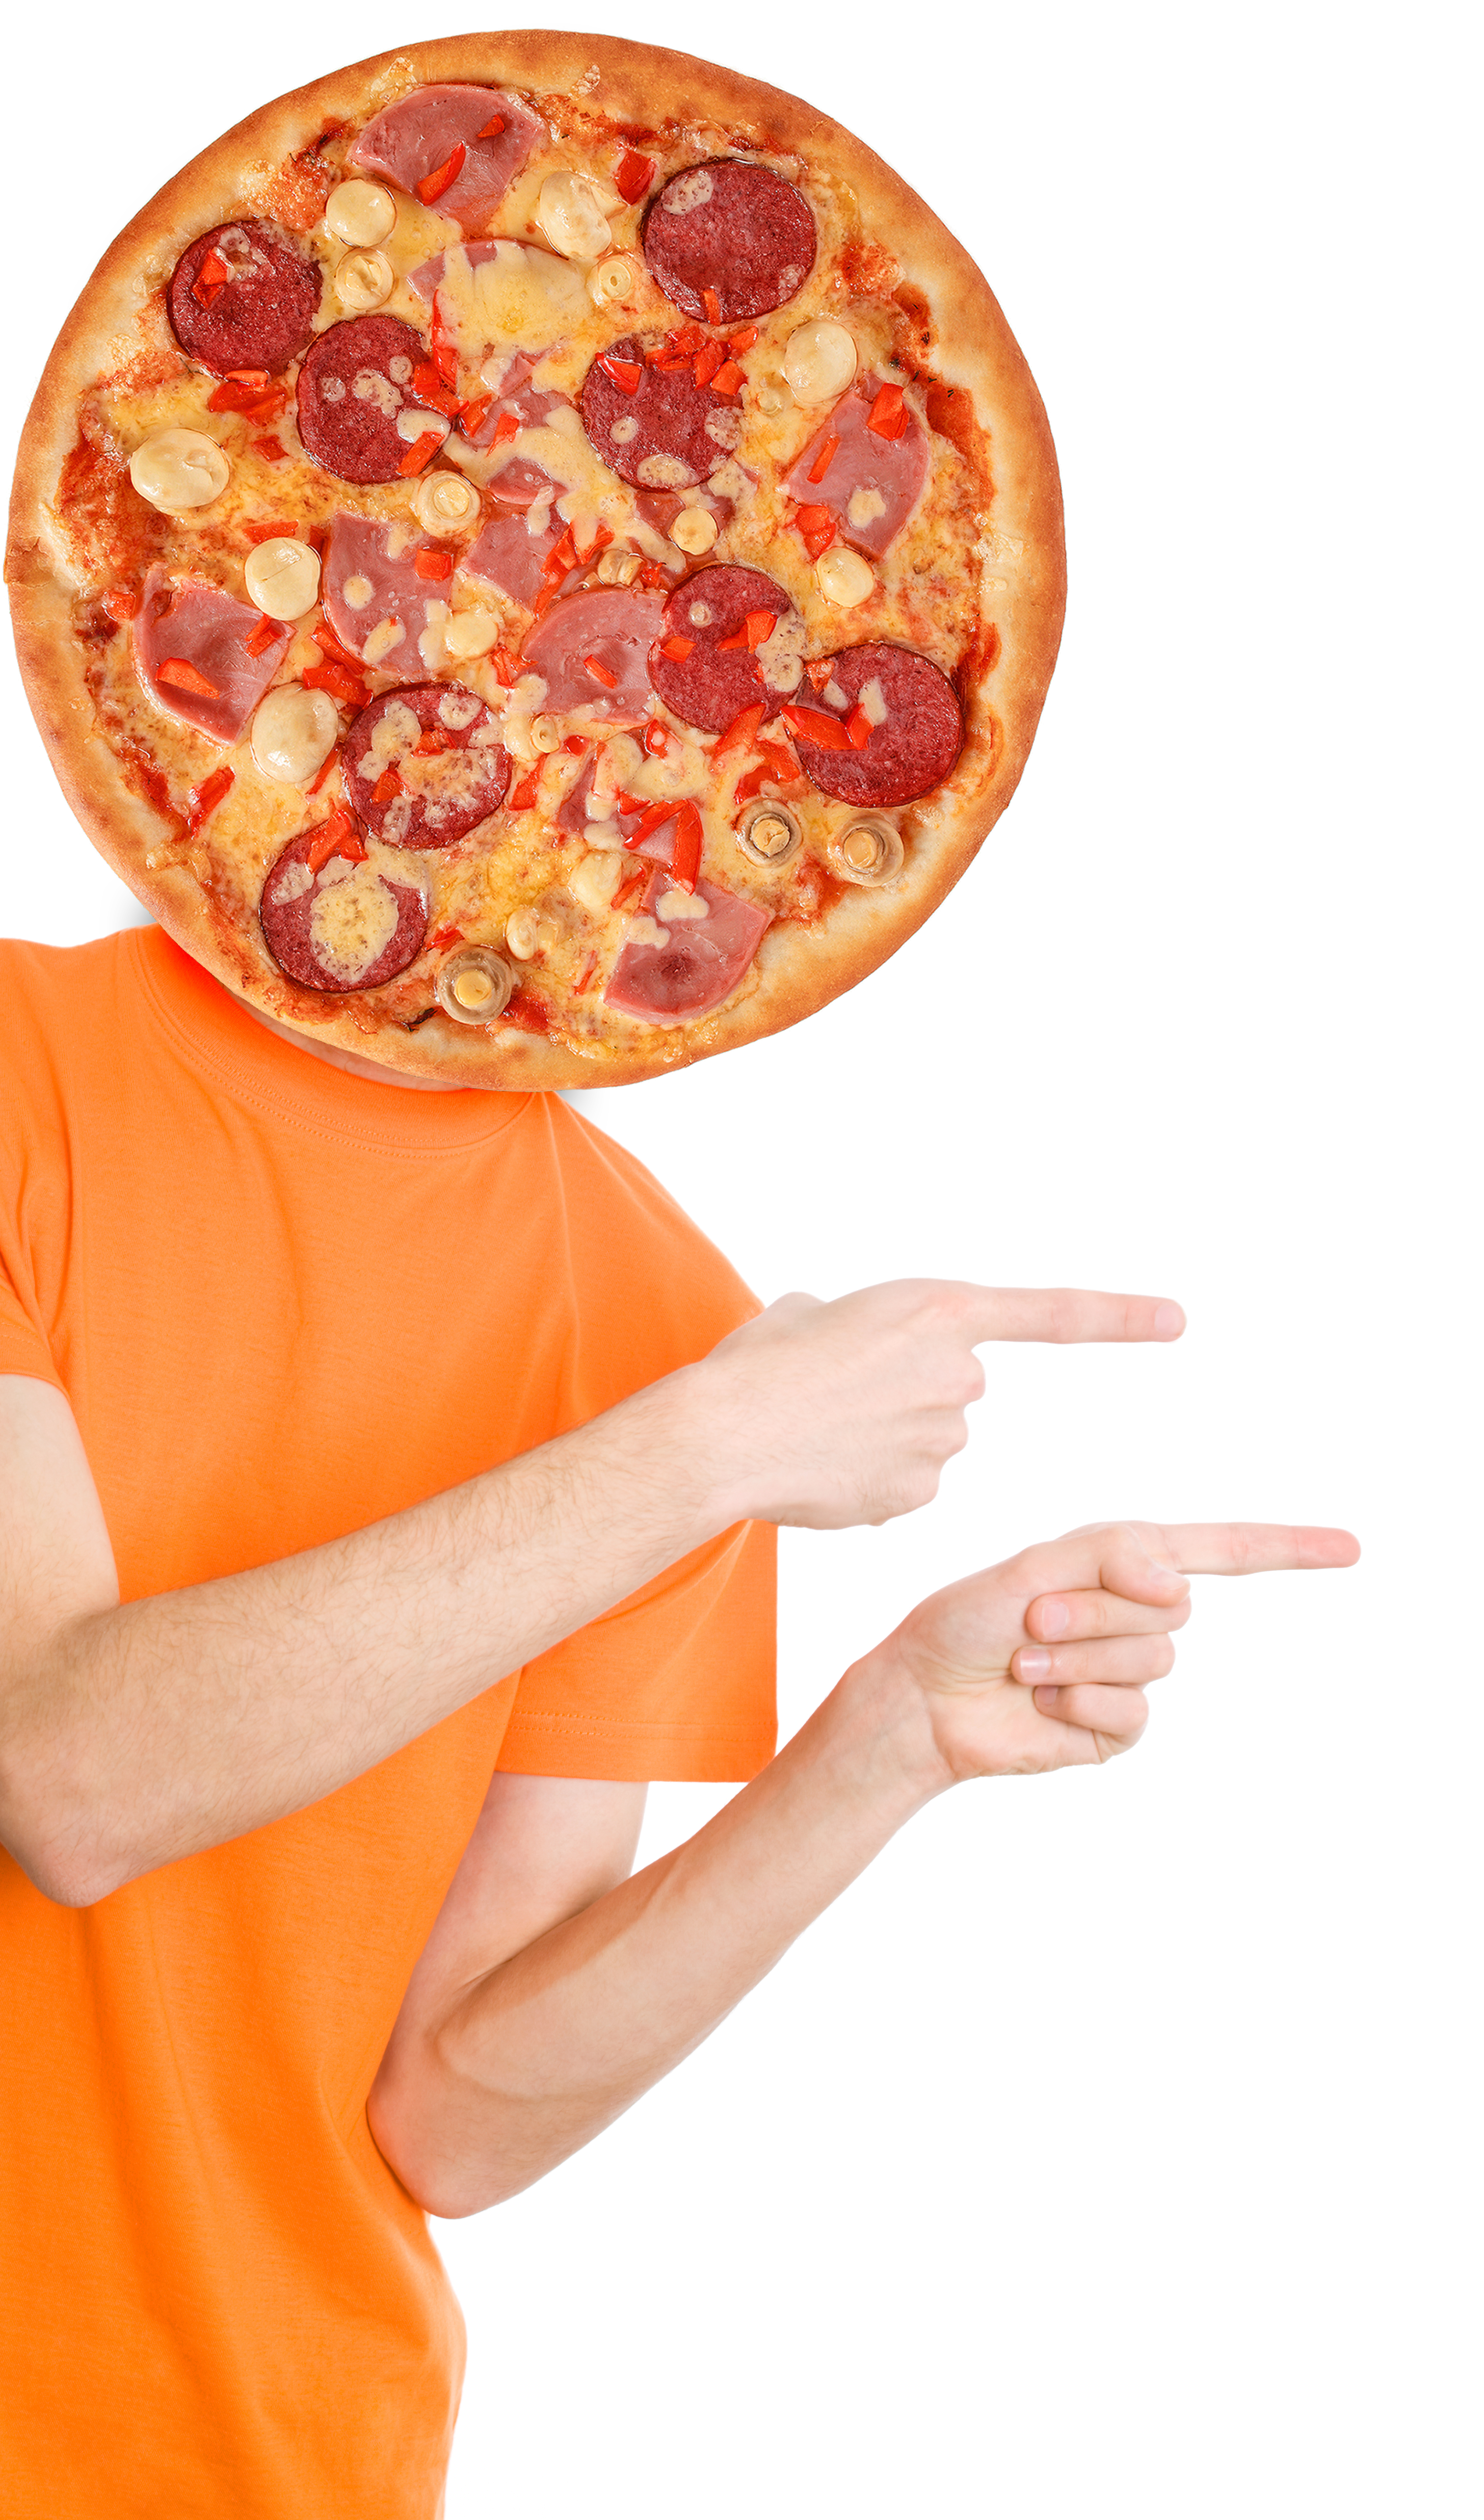 PizzaHead_OrangeShirt_Pointing - Copy